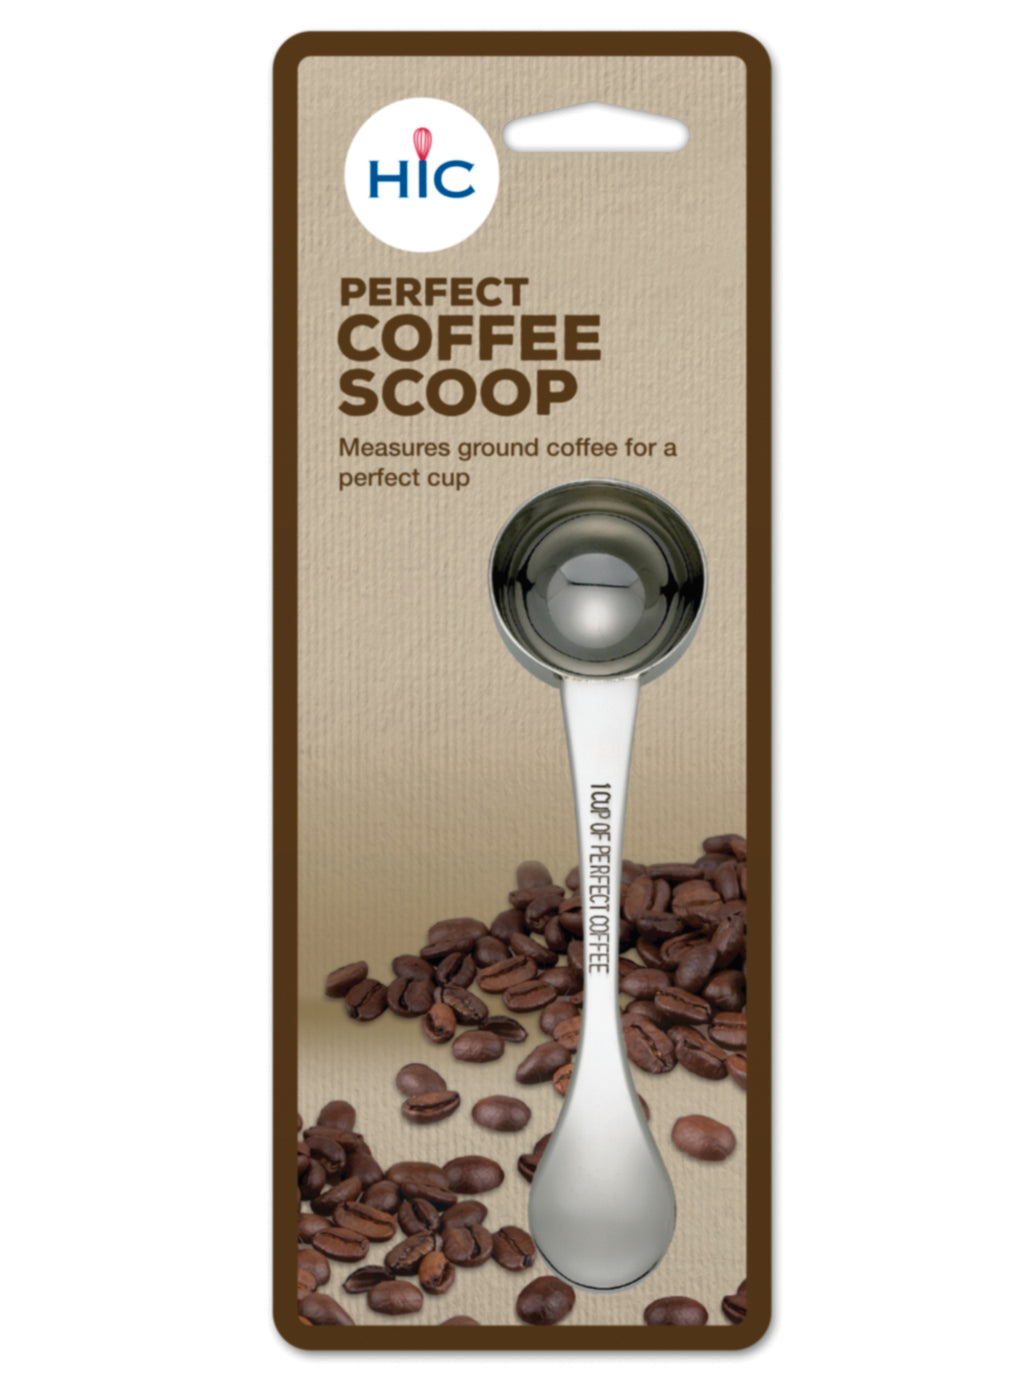 RUKDA 100Set Coffee Measuring Scoop, Reusable 4g Coffee Measuring